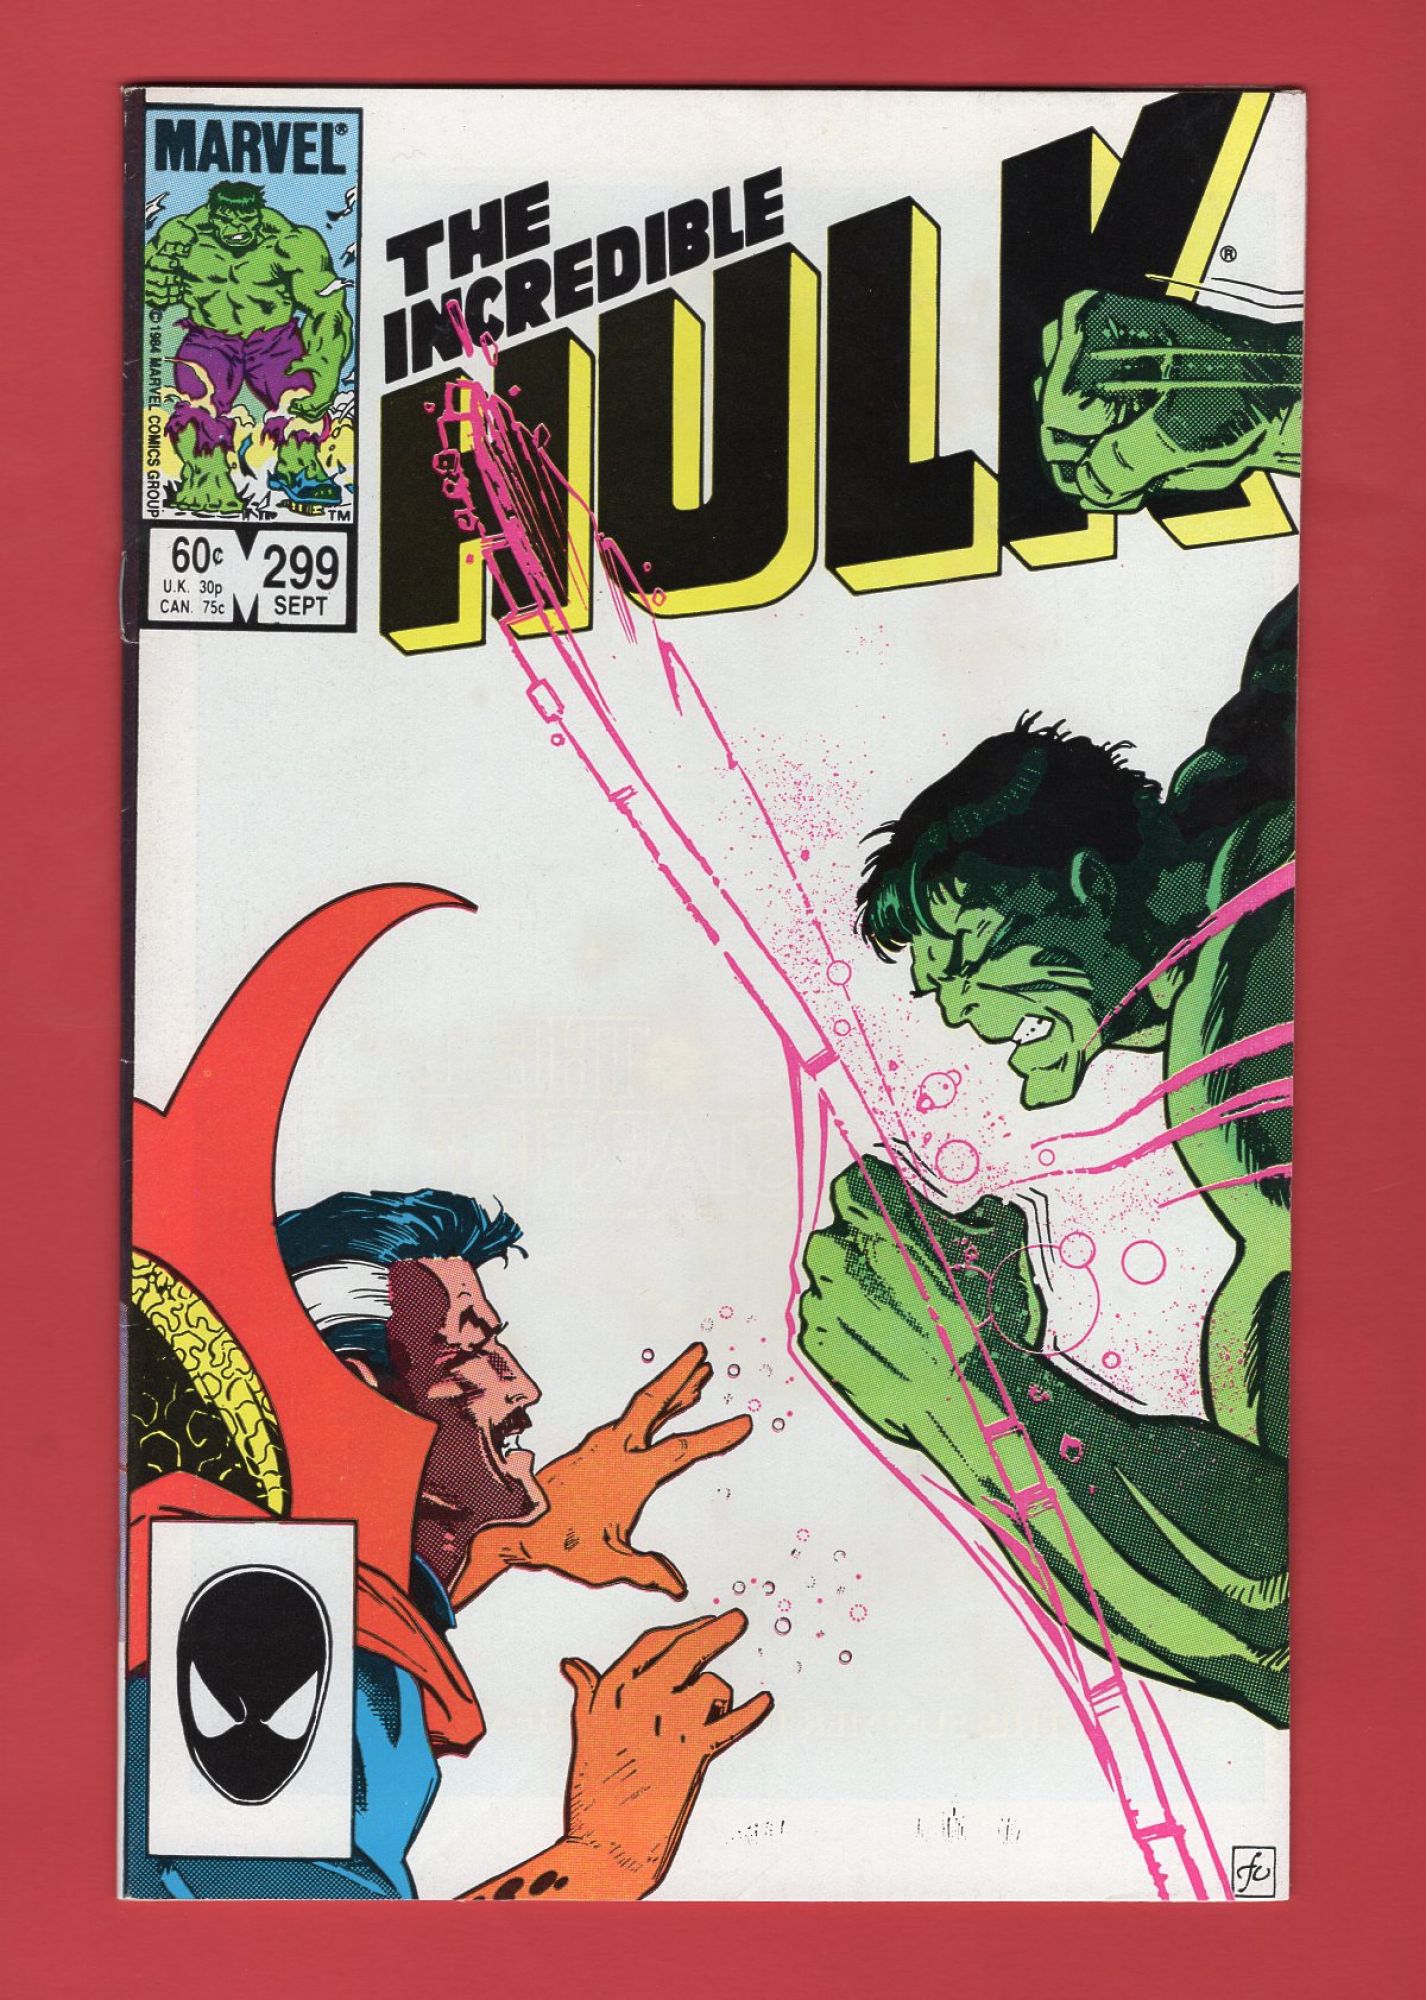 Incredible Hulk (Vol 1 1962) Issues 251-300 :: Iconic Comics Online